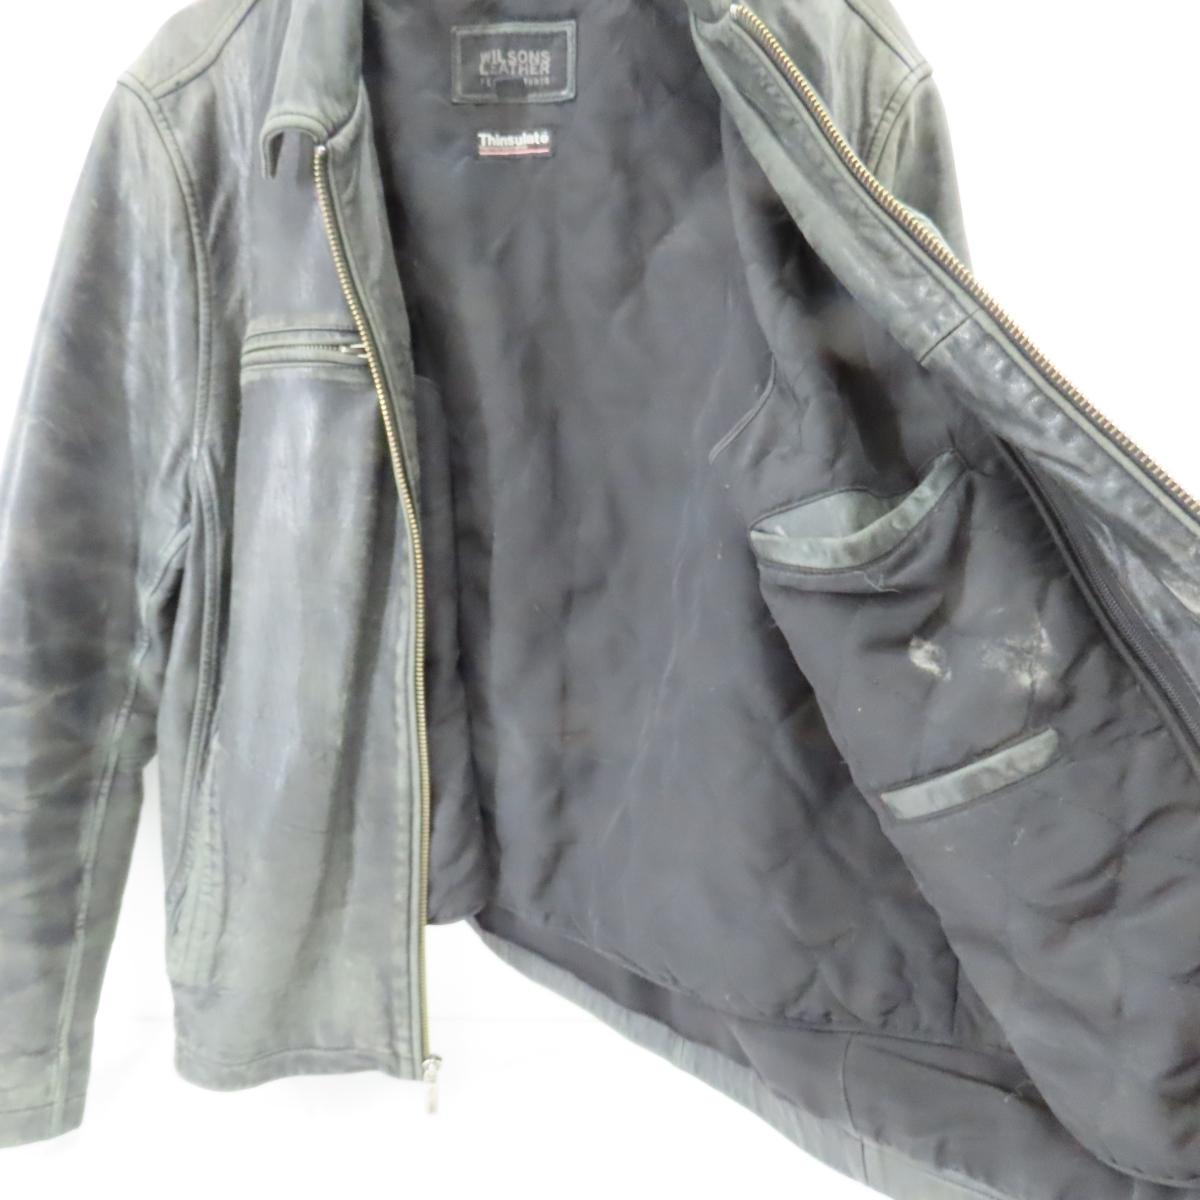 3 Vintage leather jackets